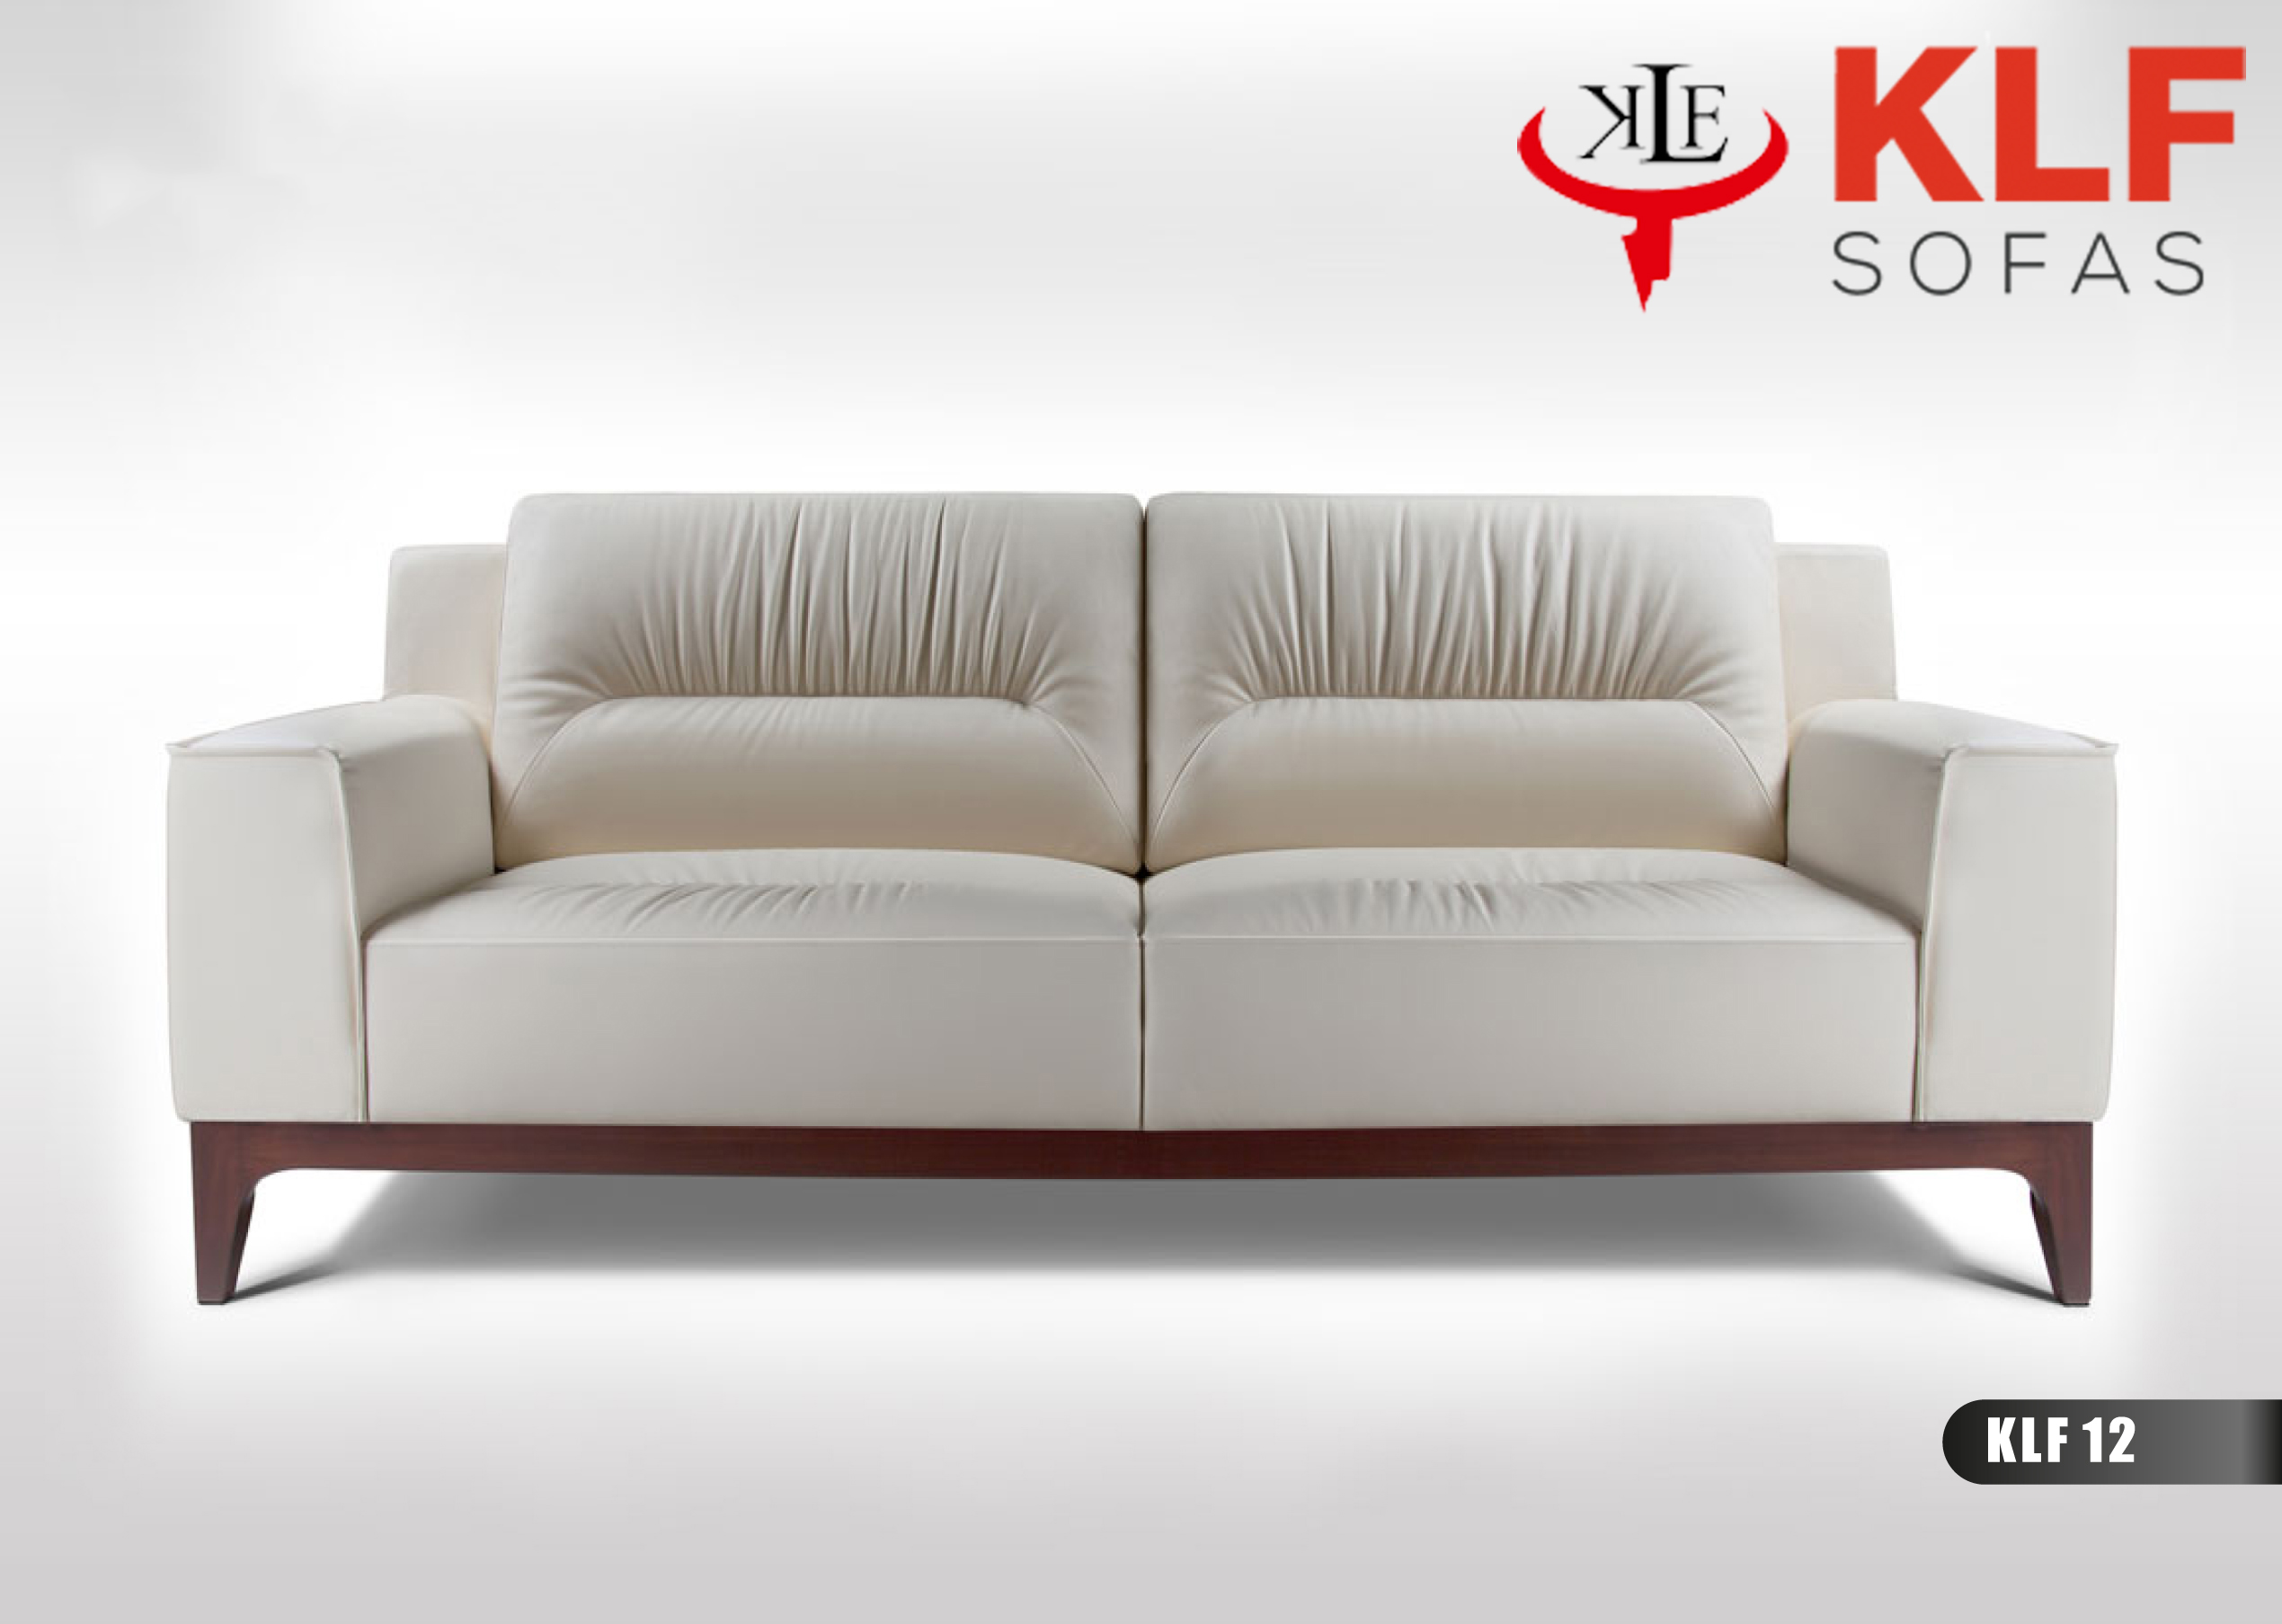 KLF Leather Sofas